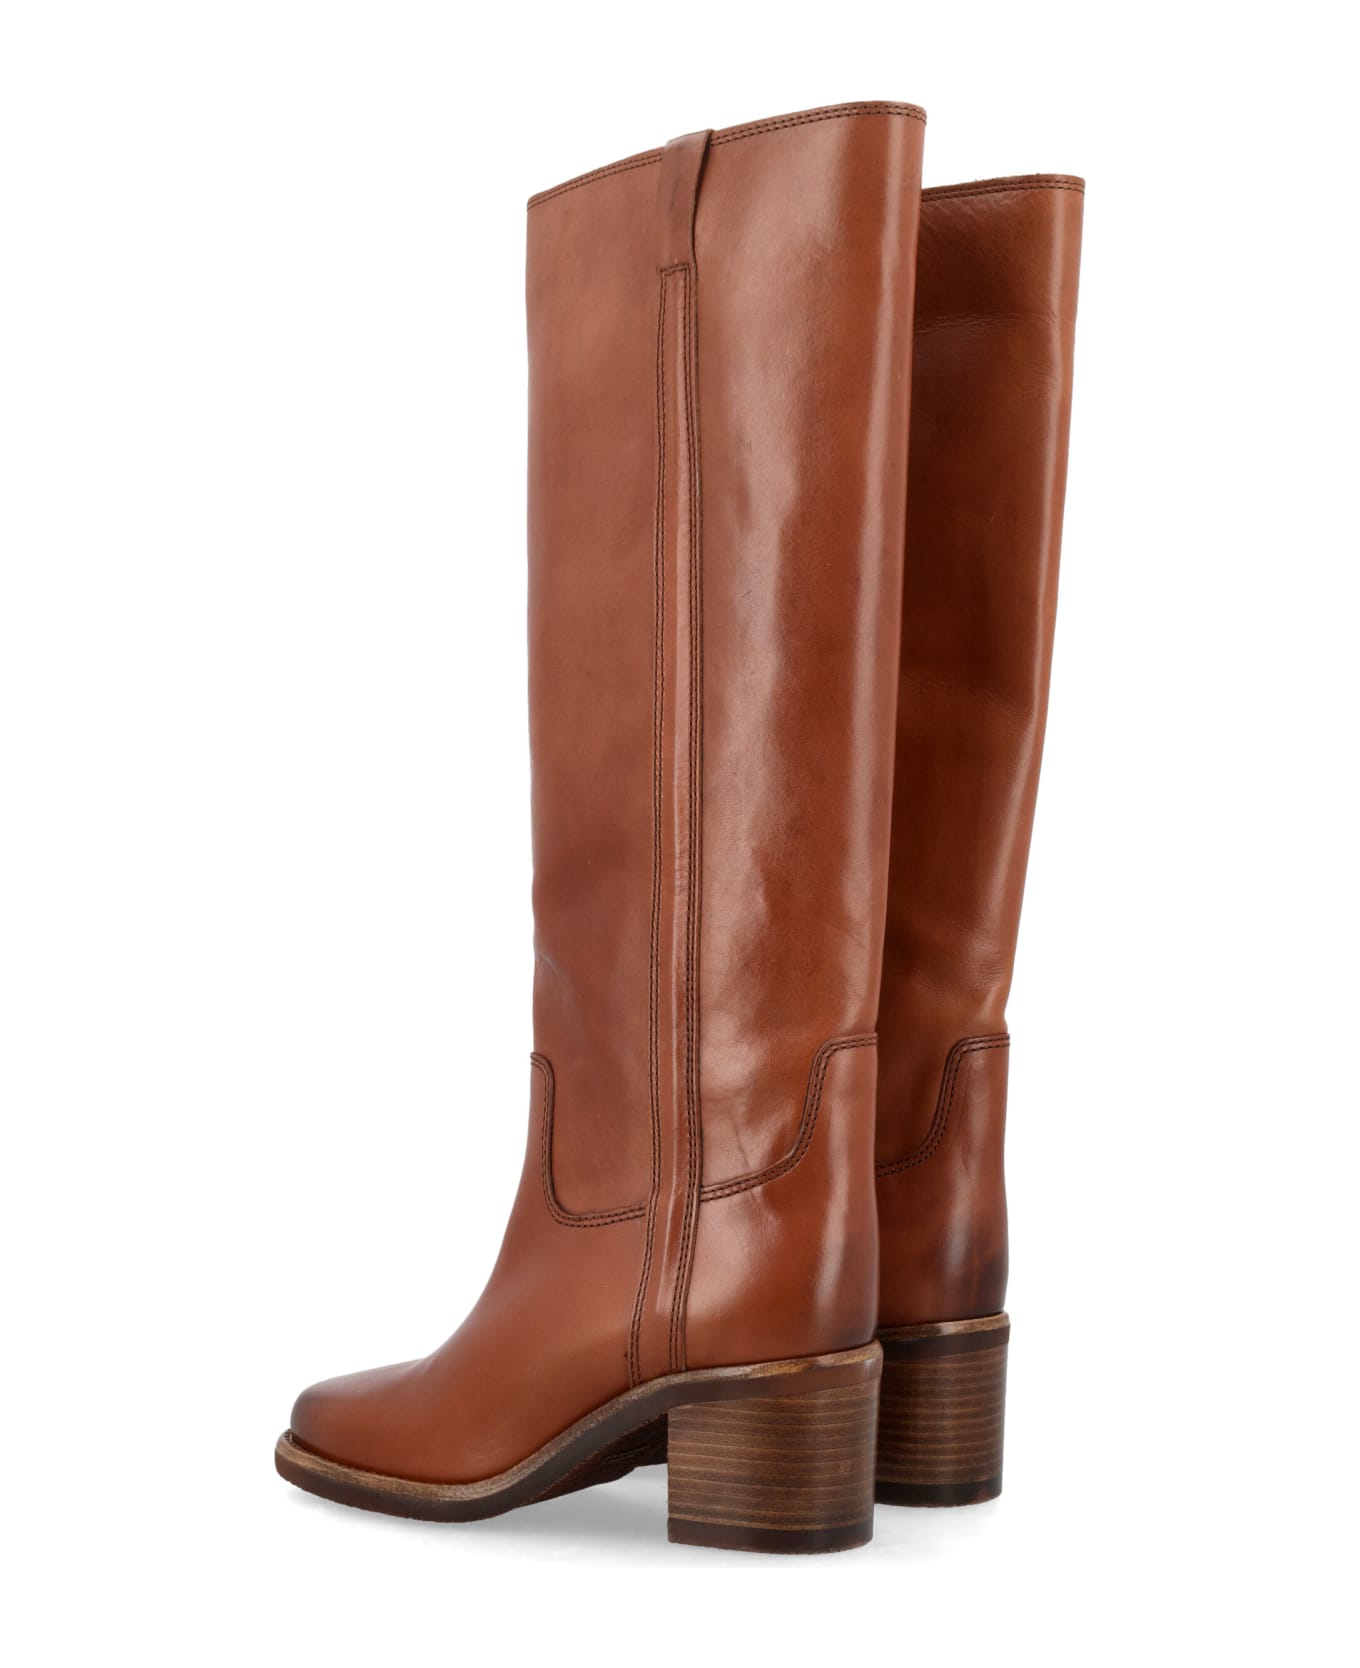 Isabel Marant Seenia Leather Boots - COGNAC